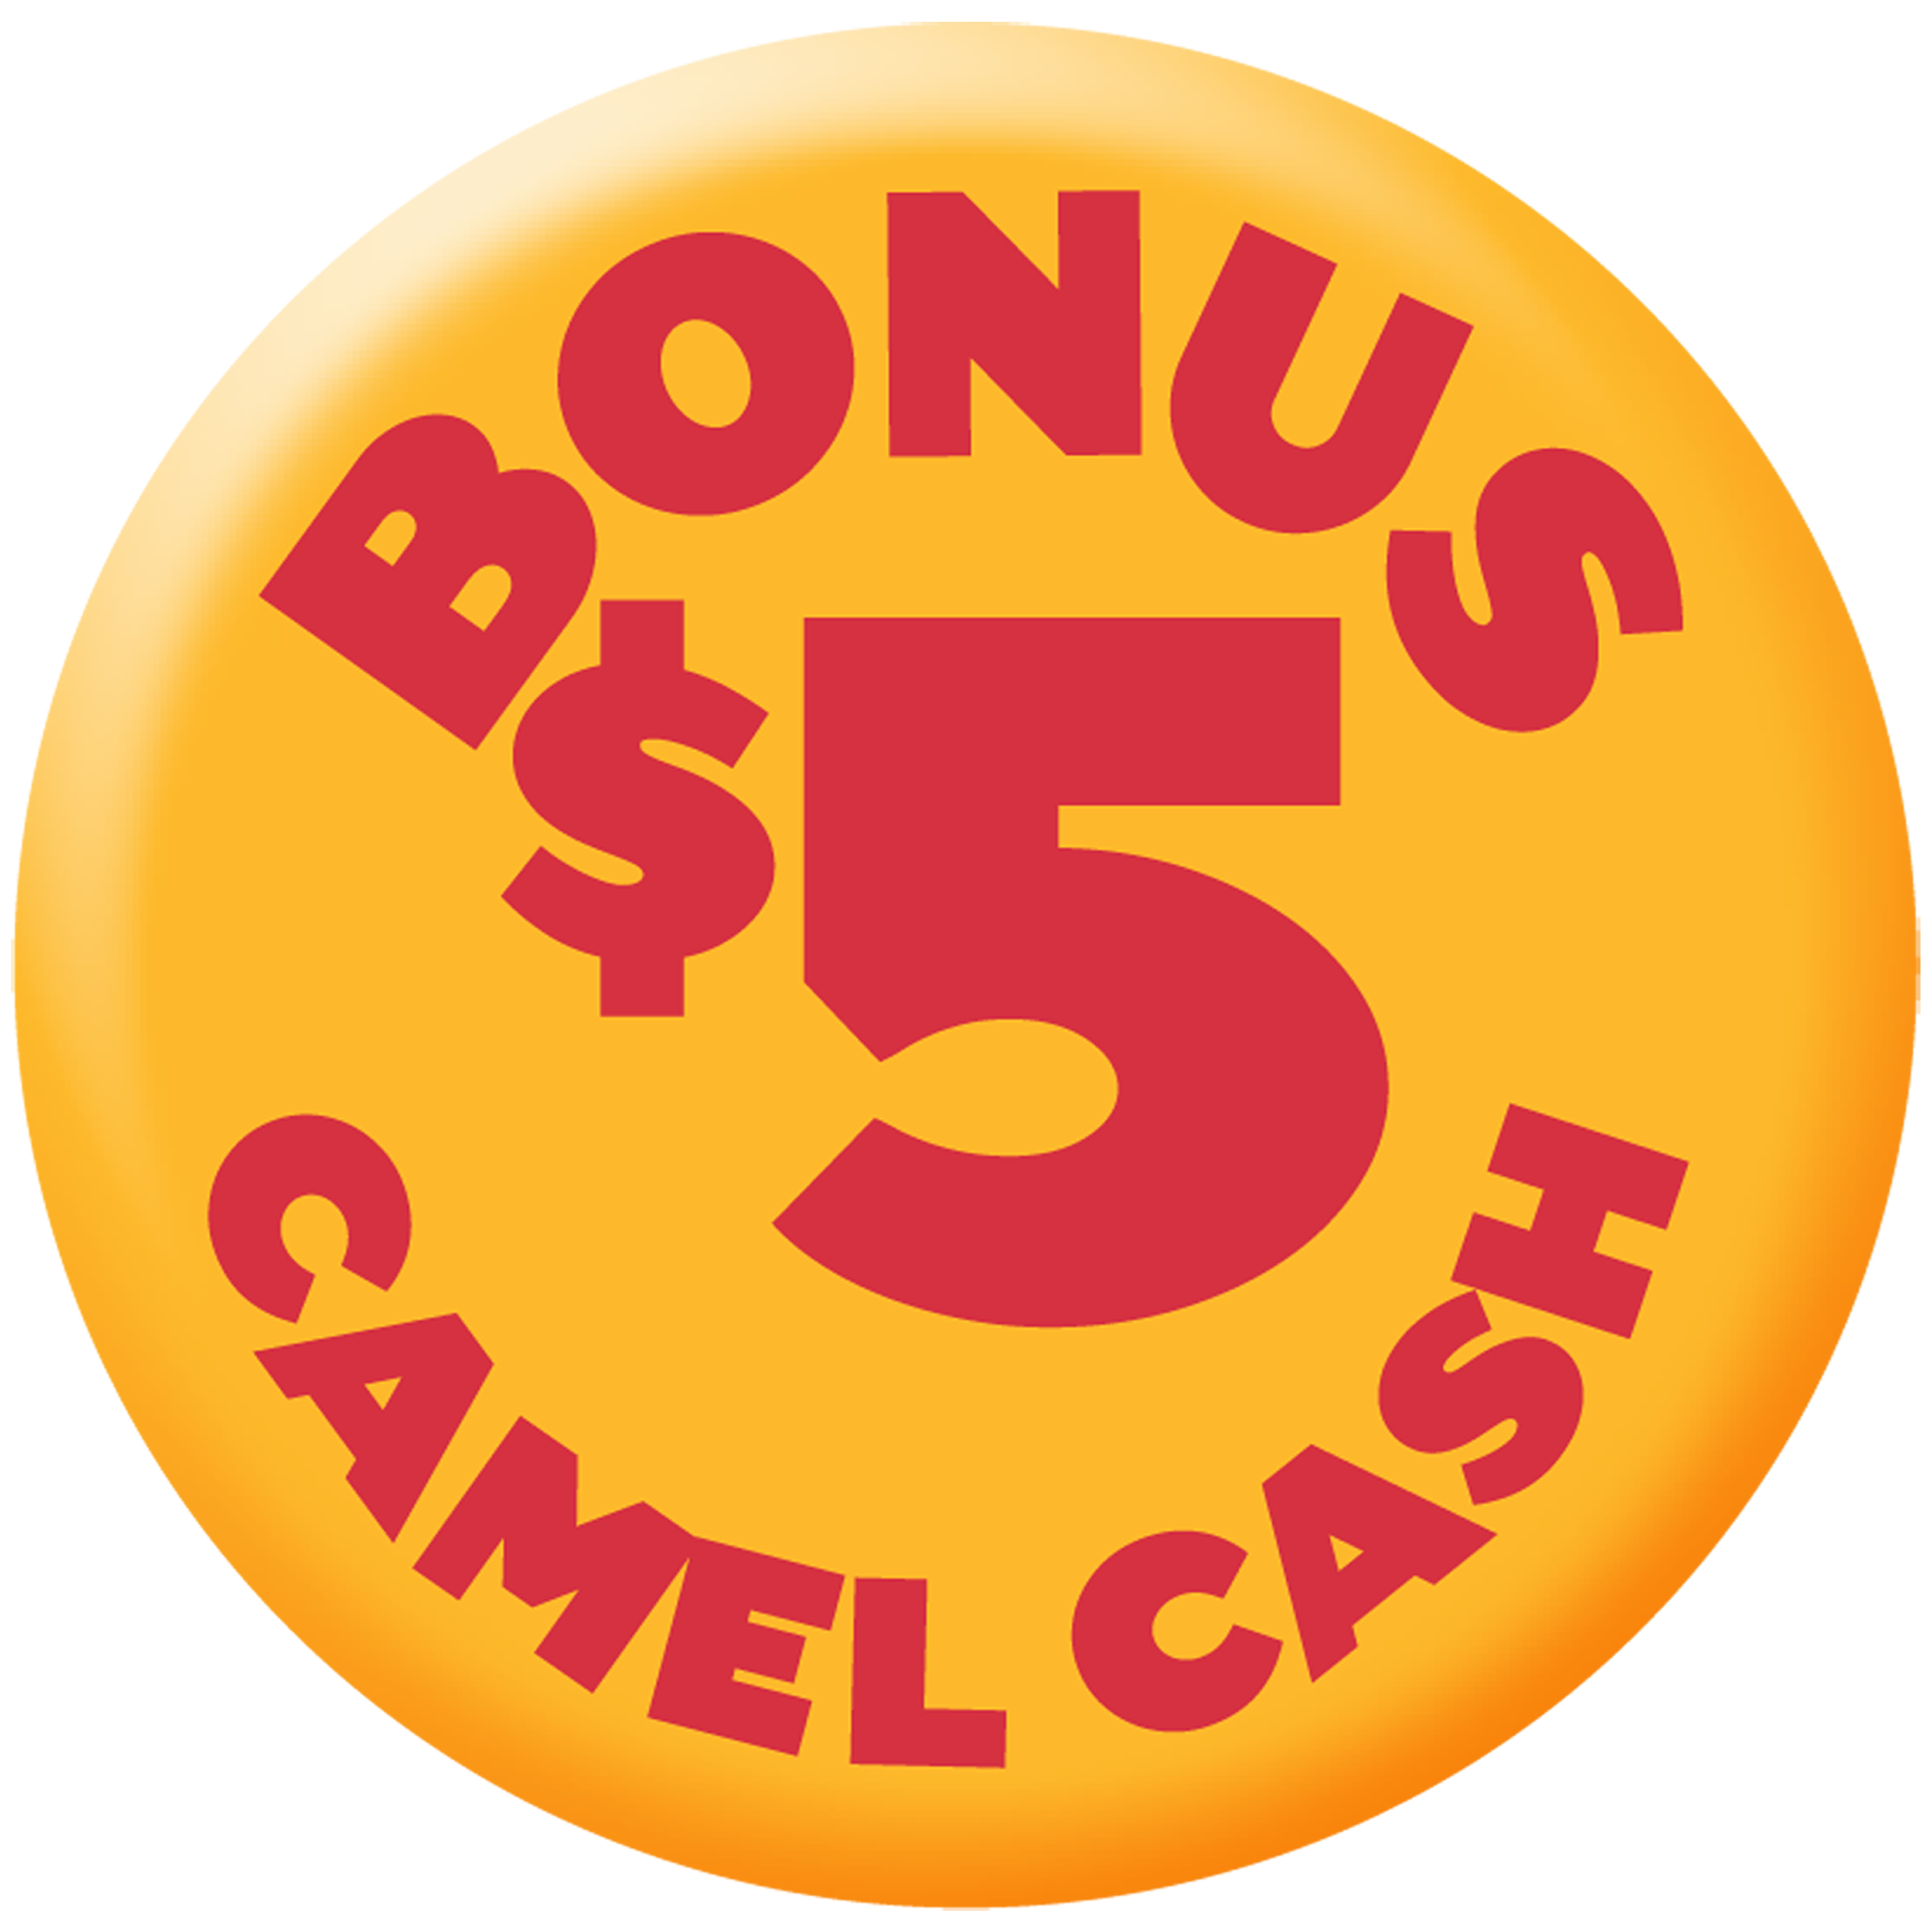 Bonus $5 Camel Cash